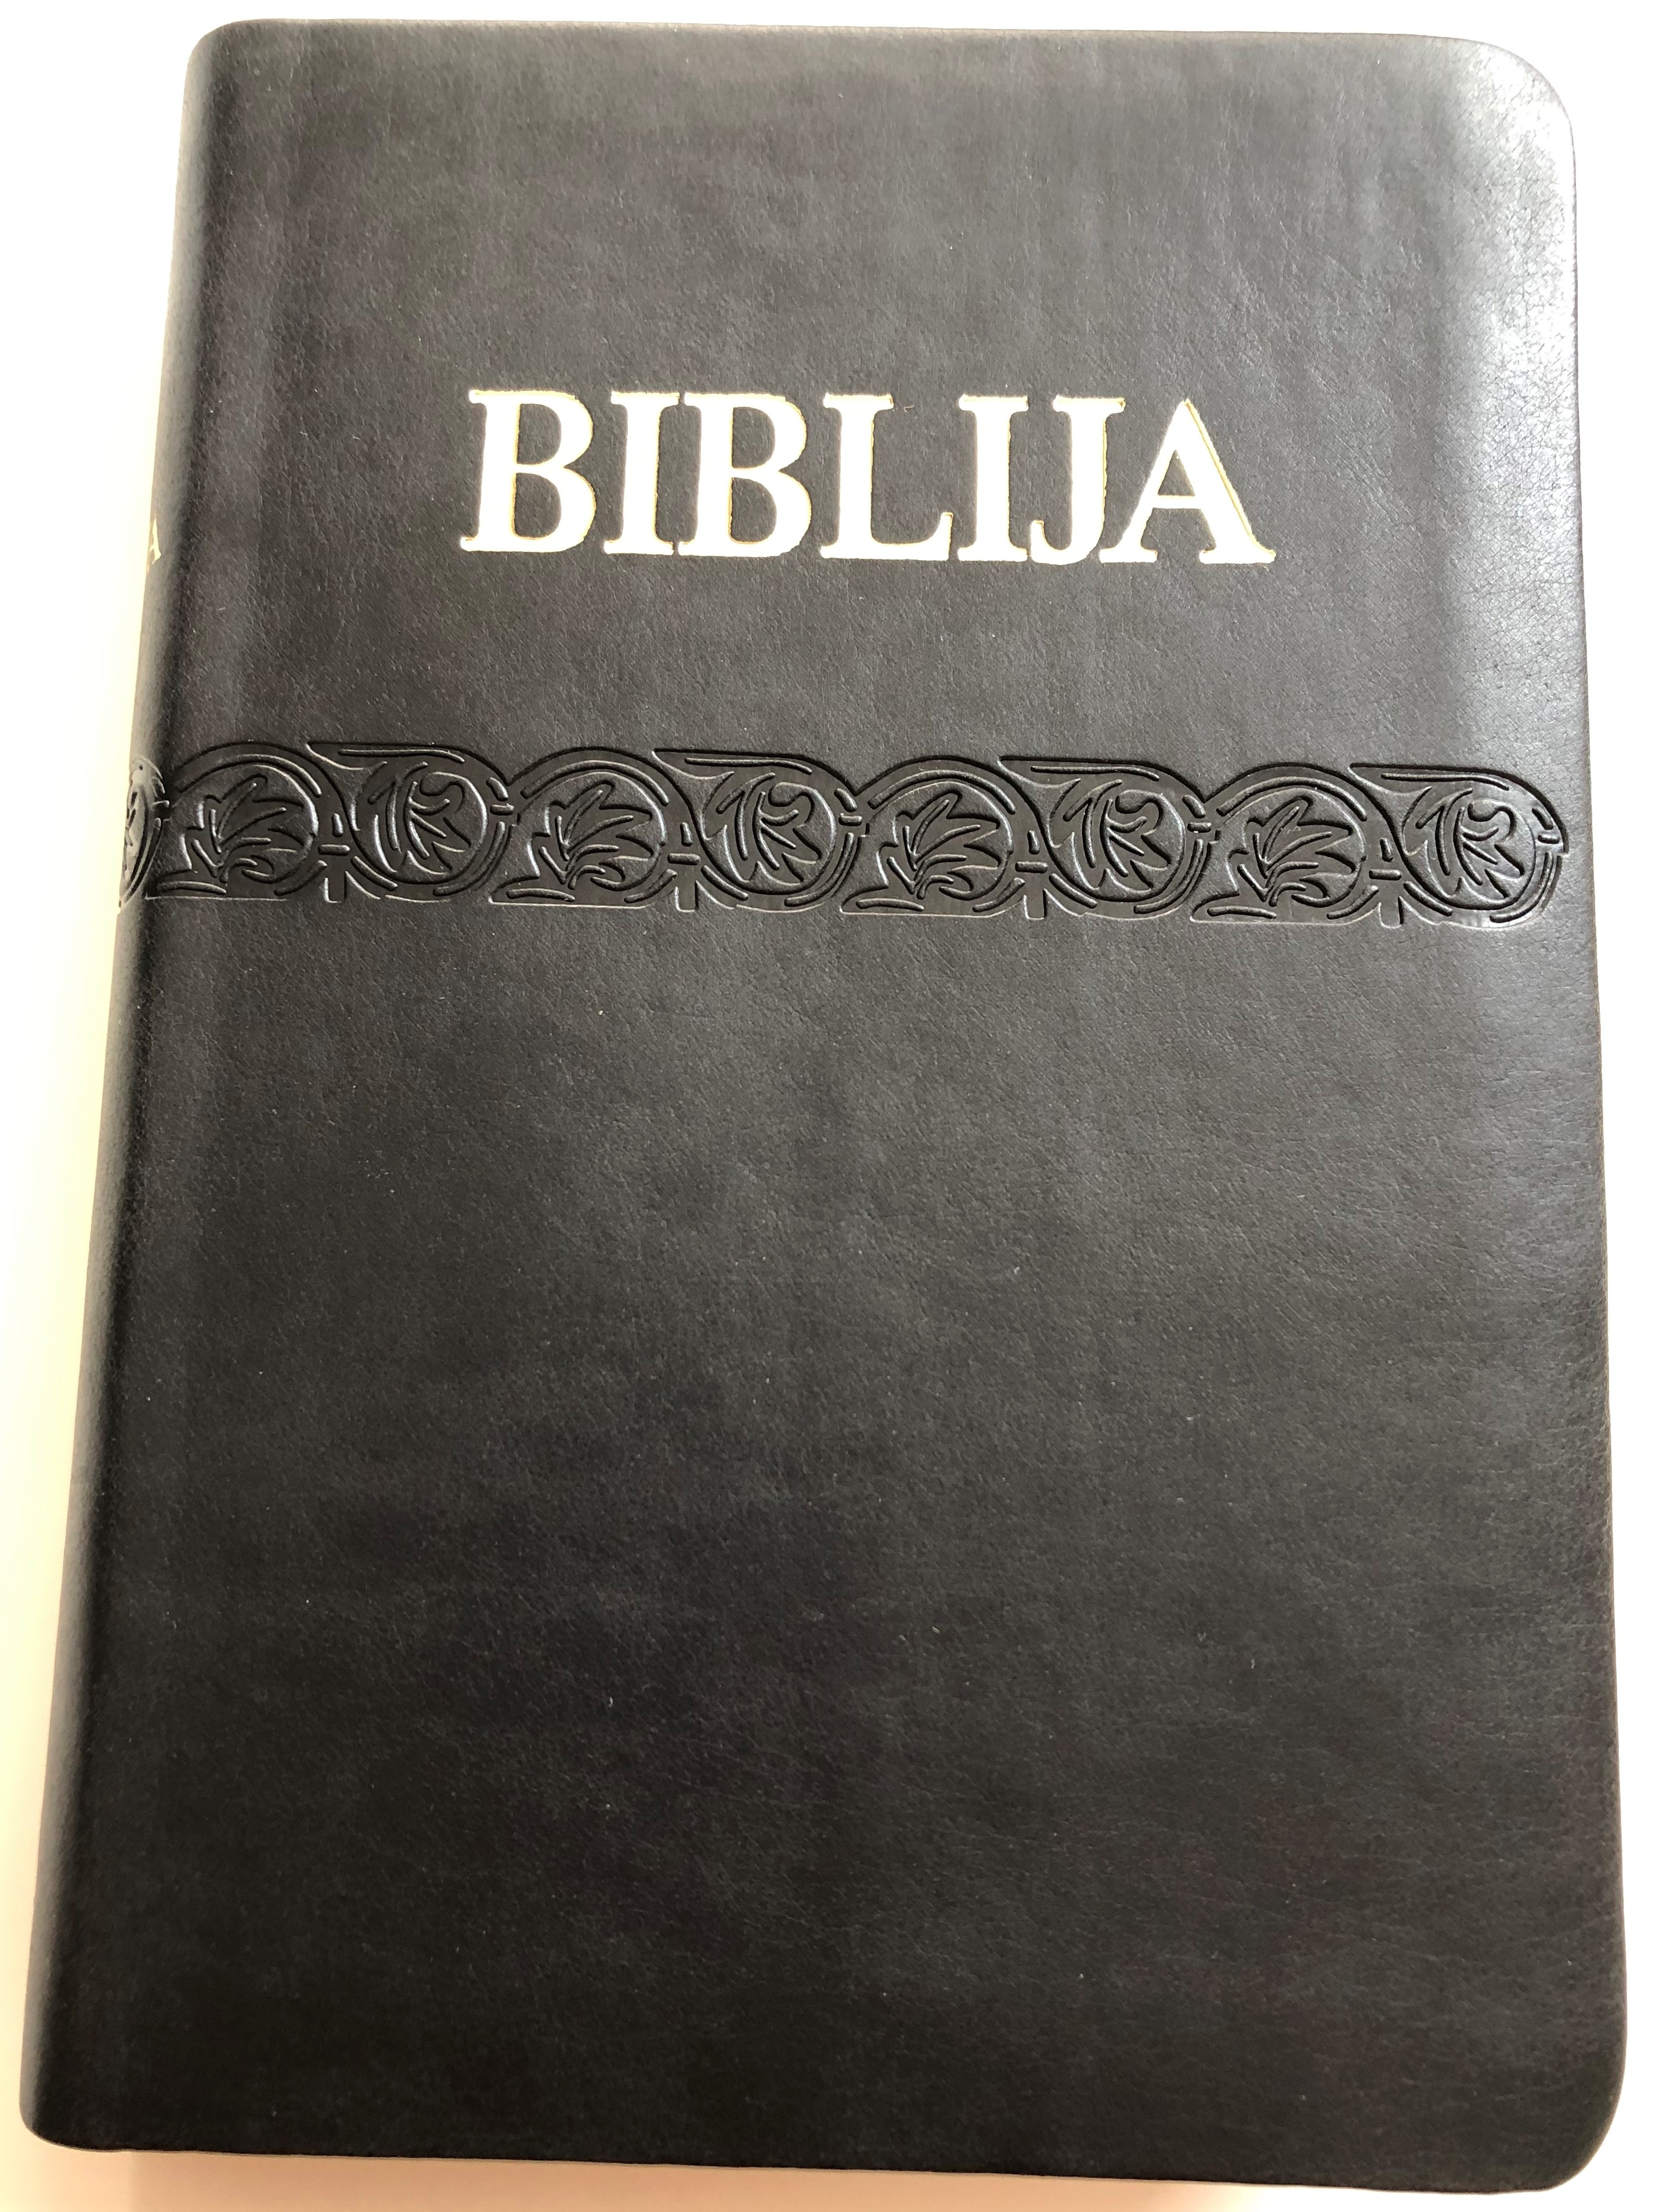 biblija-holy-bible-in-croatian-language-leather-bound-black-golden-edges-1.jpg